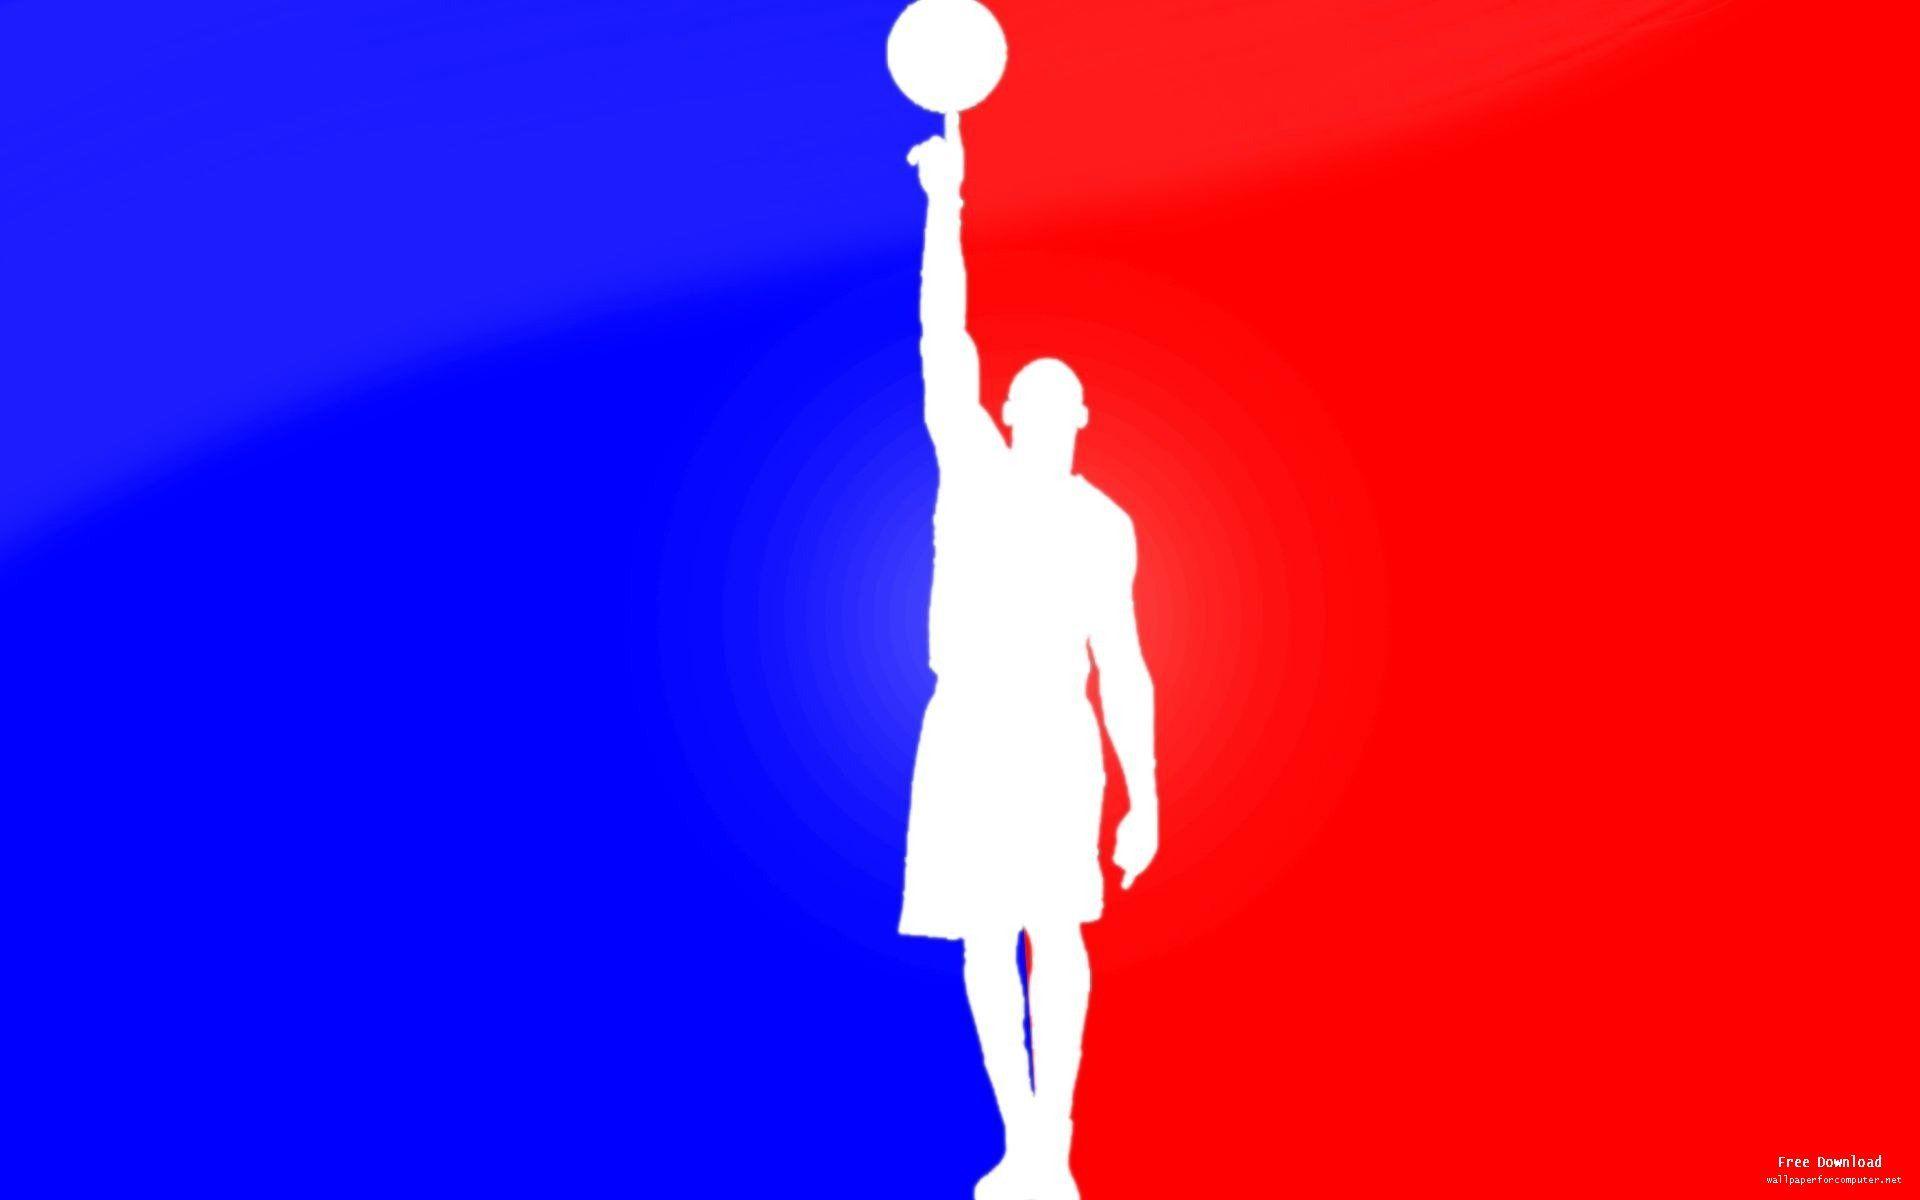 NBA Logo Wallpaper Coolest Ever Free wallpaper download 1600×1200